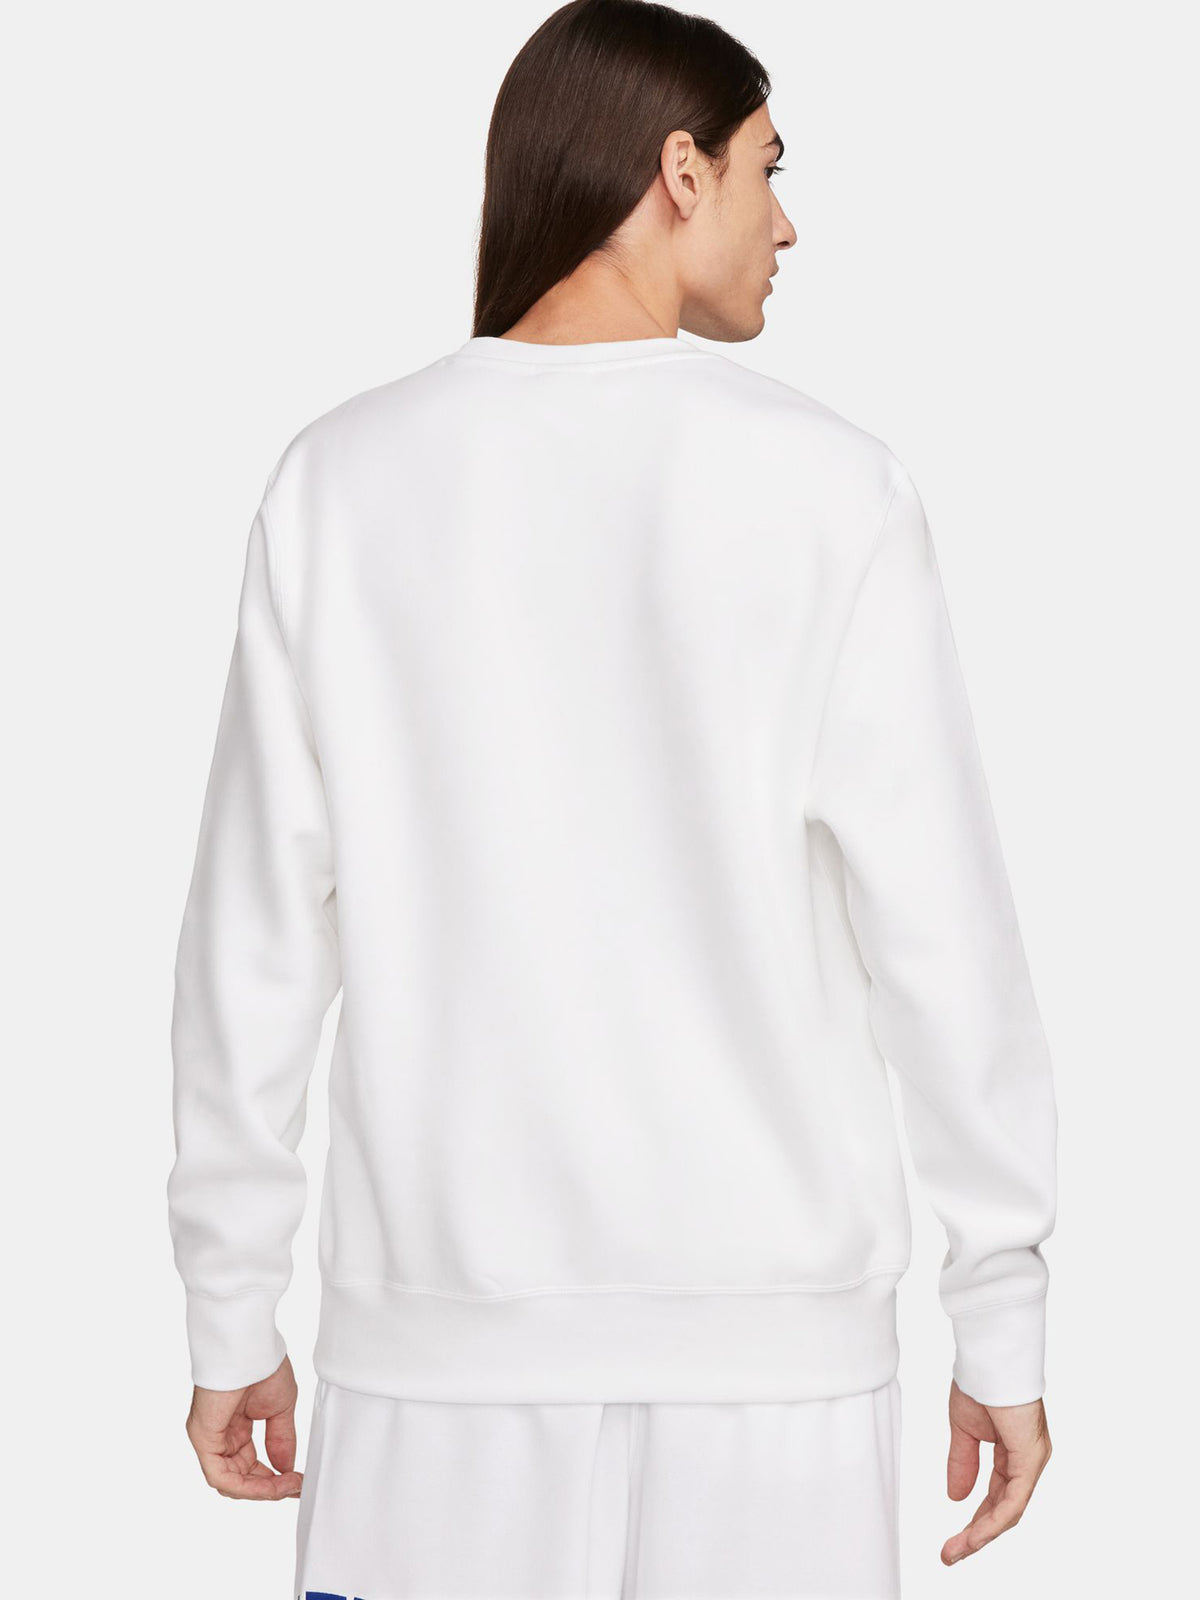 Club Fleece Long Sleeve Crew Neck Sweatshirt in White &amp; Safety Orange